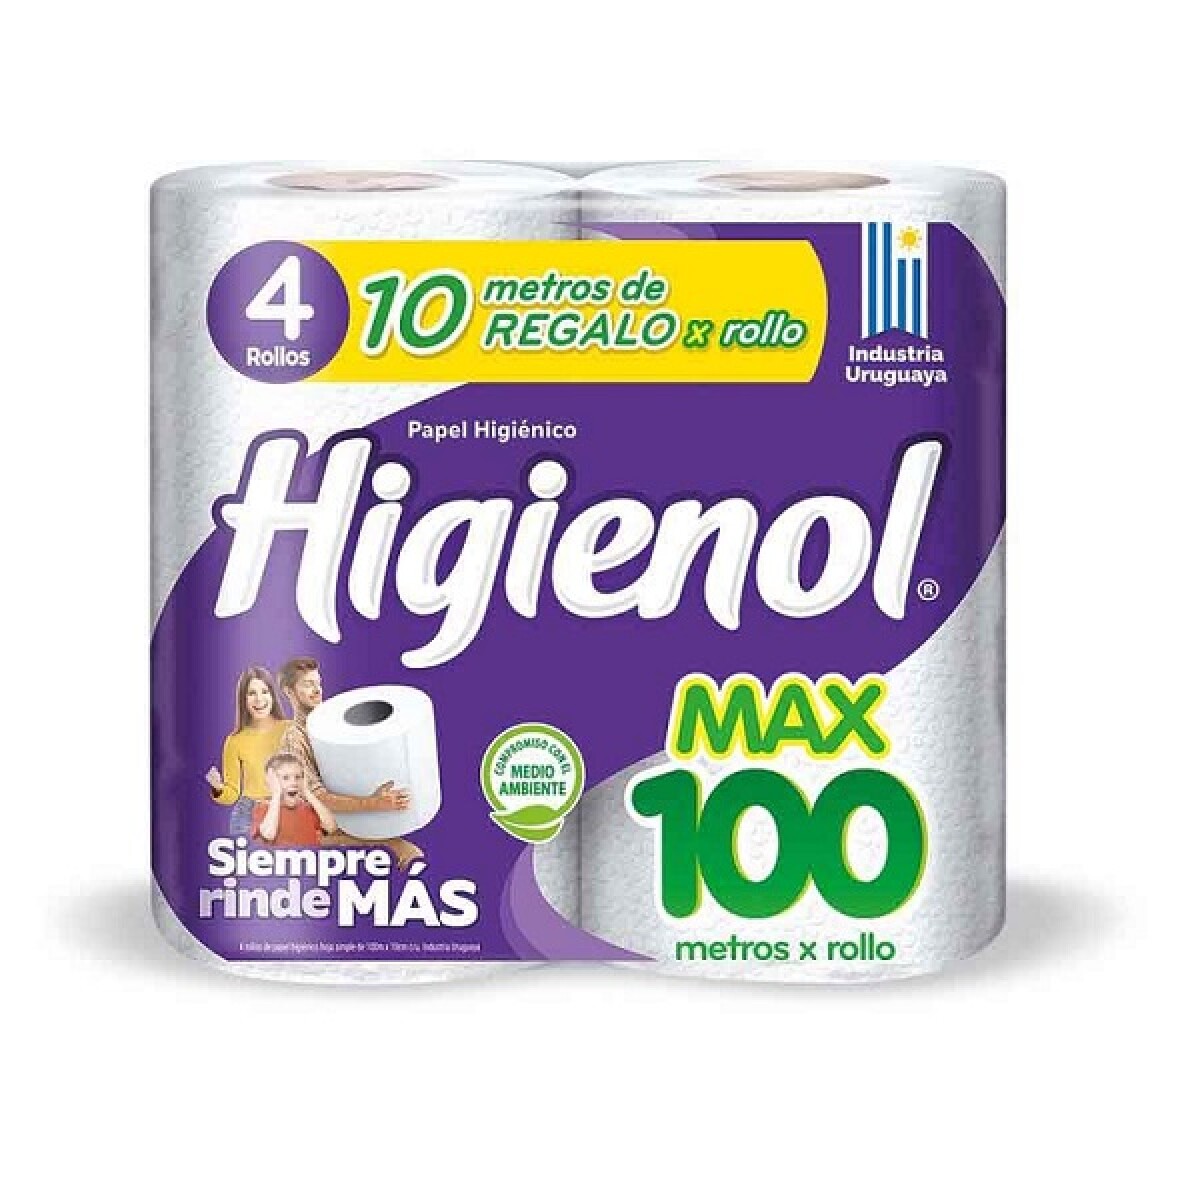 Papel Higiénico Higienol Max 100 Metros 4 Rollos 